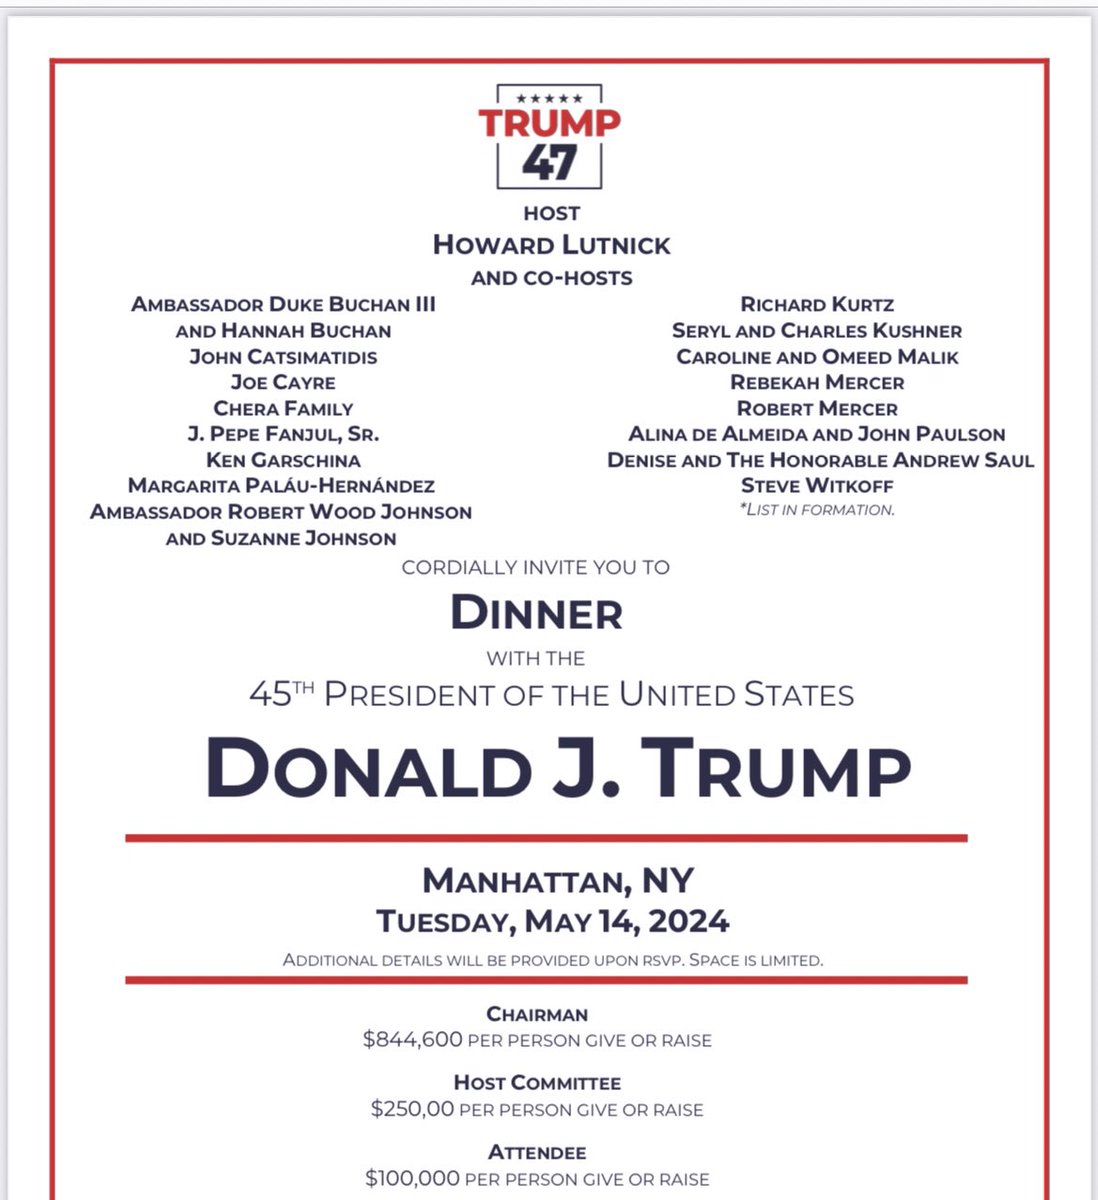 New Trump fundraising dinner the week after next in New York, per invite. Hosts include Woody Johnson, @RealOmeedMalik, Charles Kushner, John Paulson, Steve Witkoff, Rebekah and Bob Mercer.